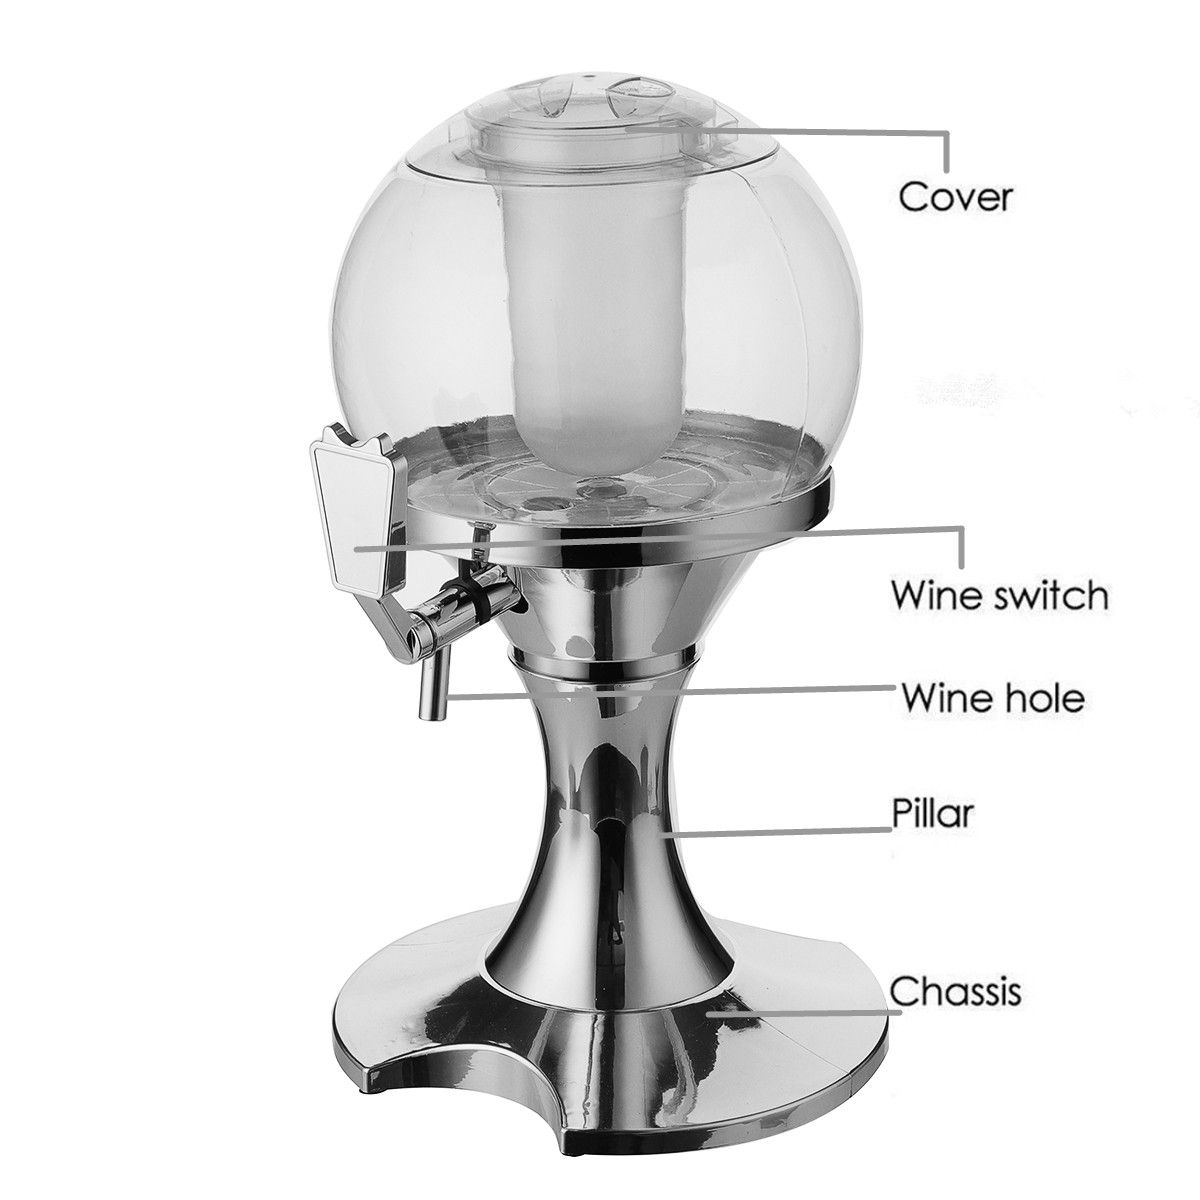 35L-Beverage-Dispenser-Ice-Core-Tower-Drink-Liquor-Container-Pourer-Bar-Machine-1389414